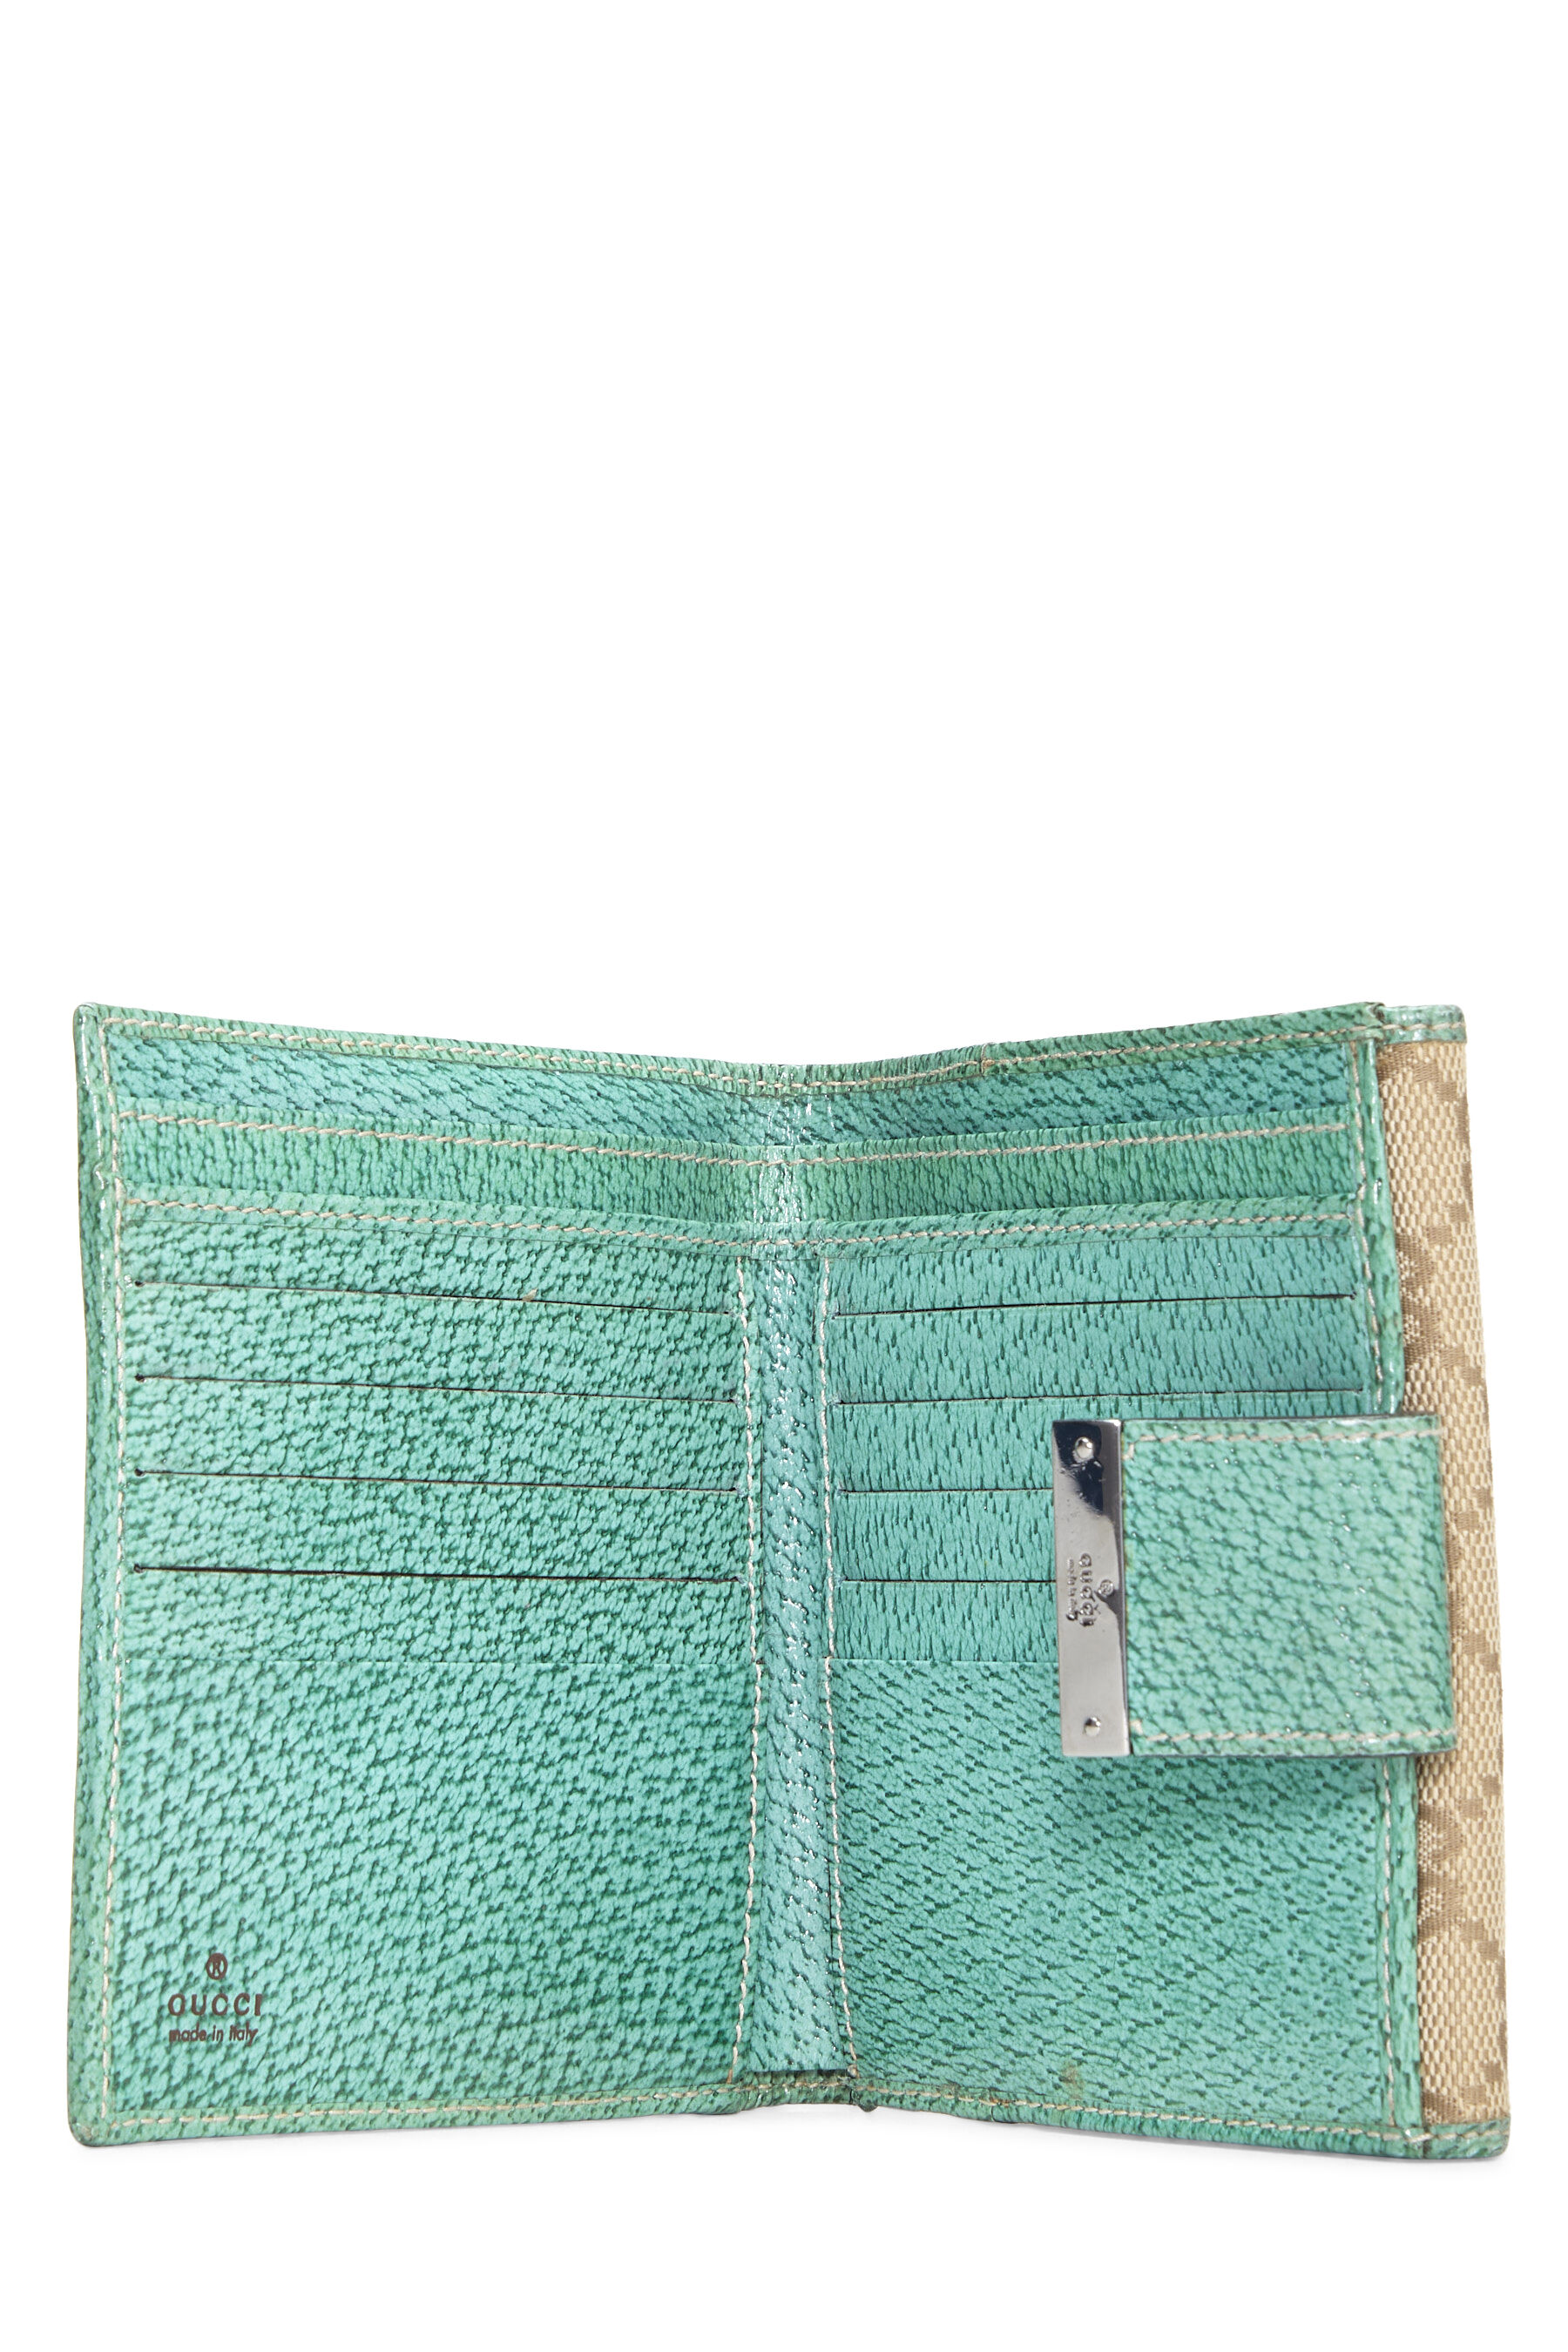 Green & Beige Original GG Supreme Canvas Compact Wallet